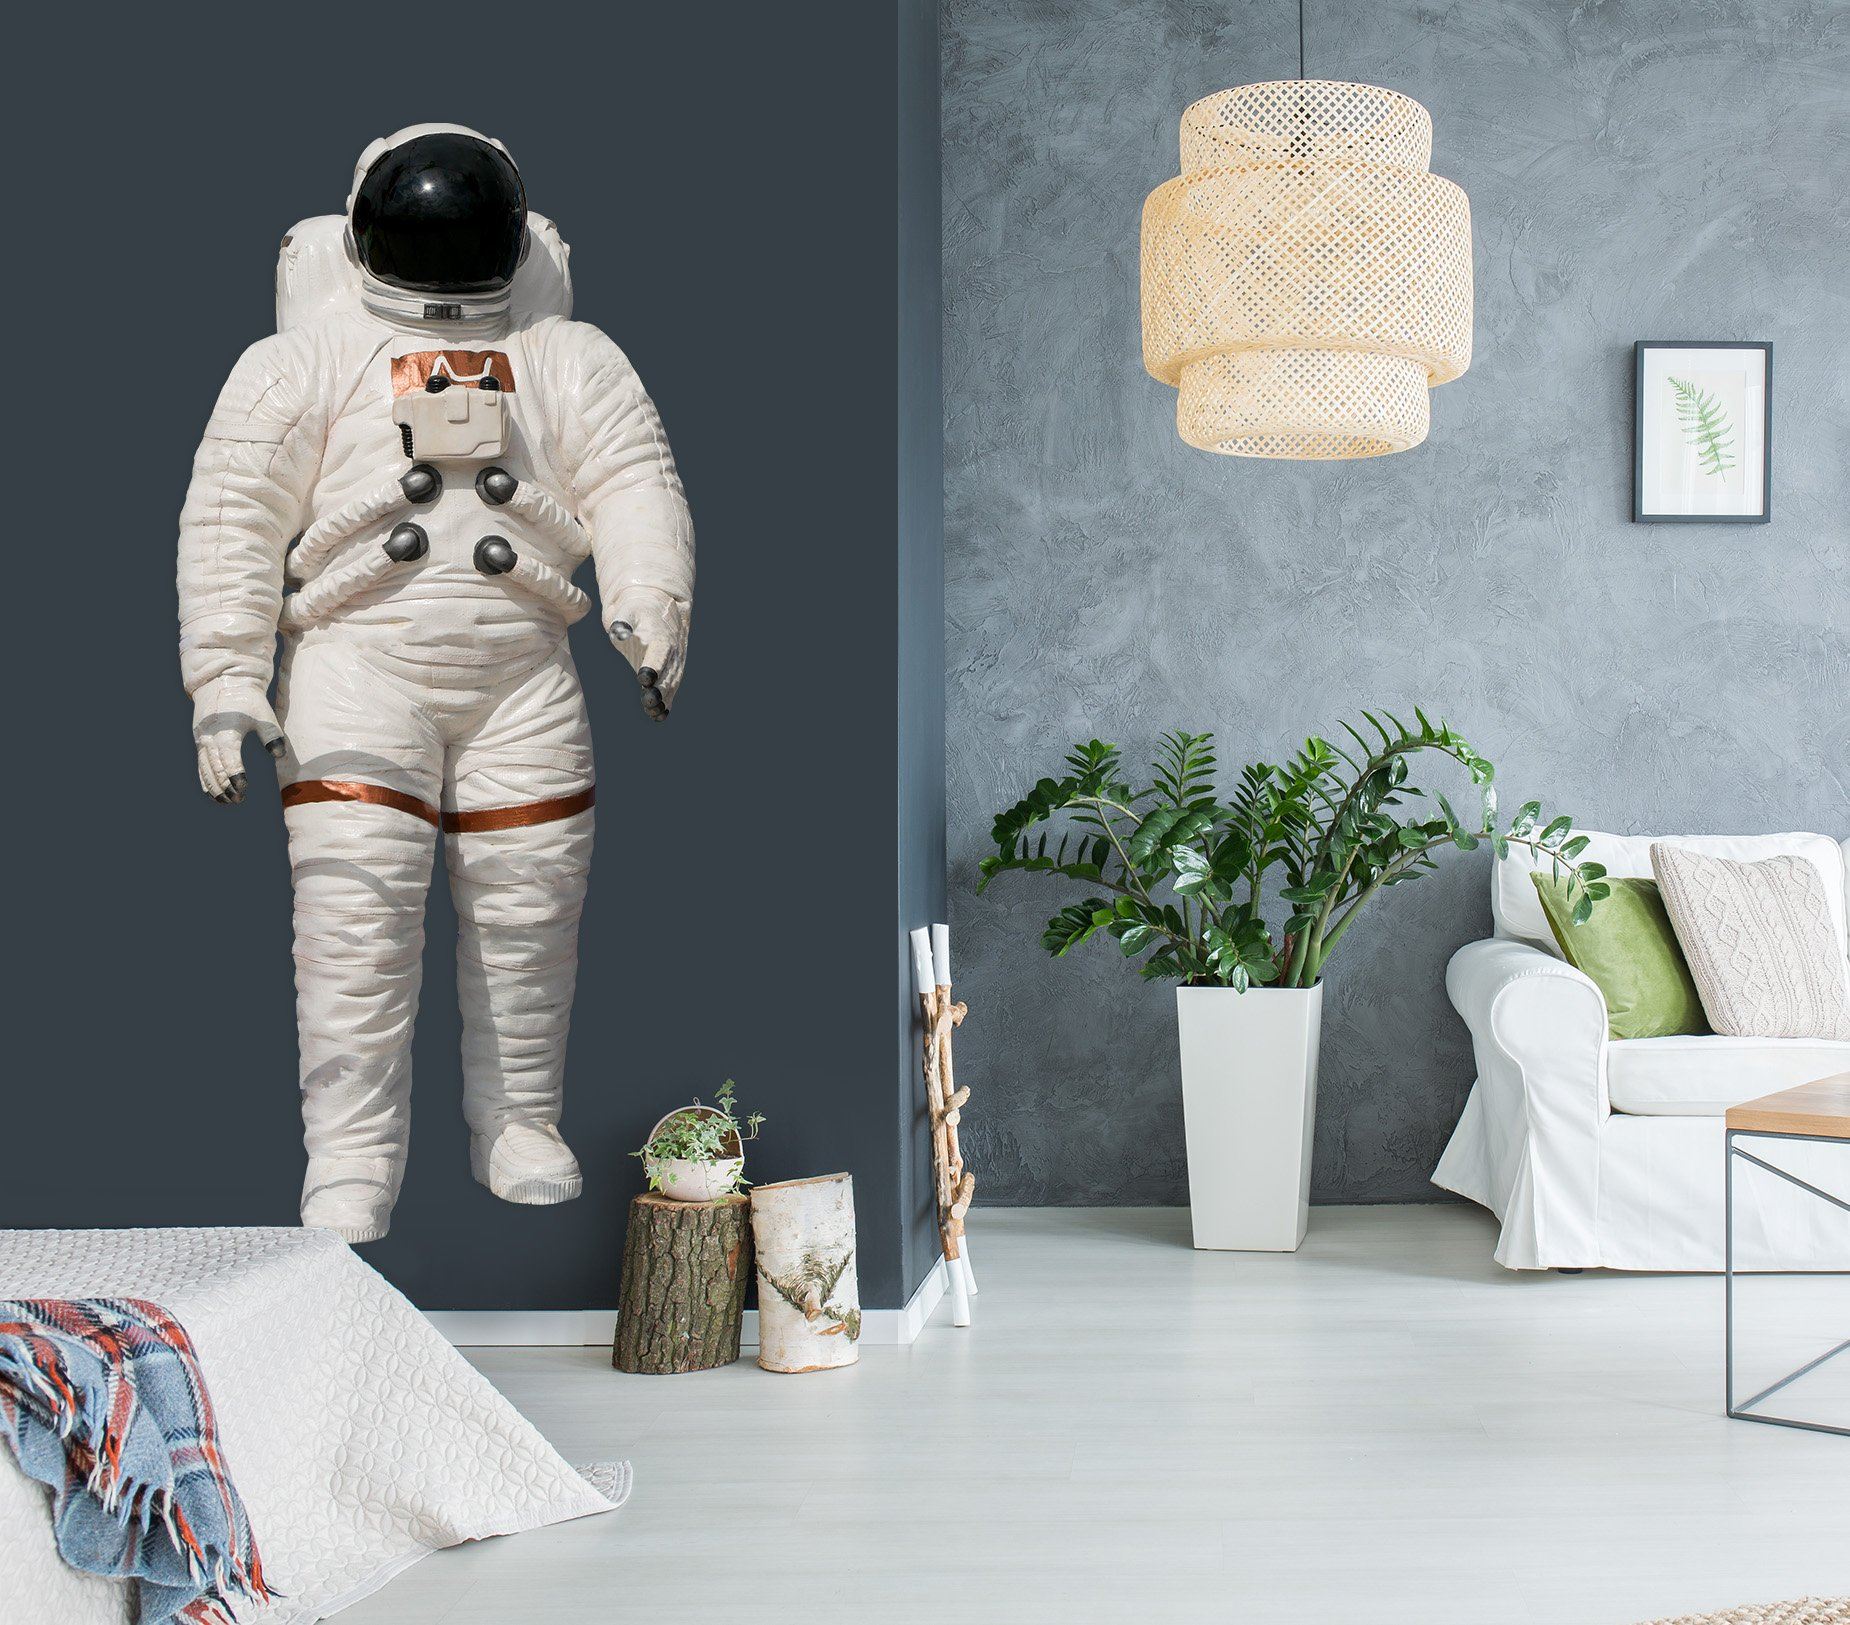 3D Astronaut 0233 Wall Stickers Wallpaper AJ Wallpaper 